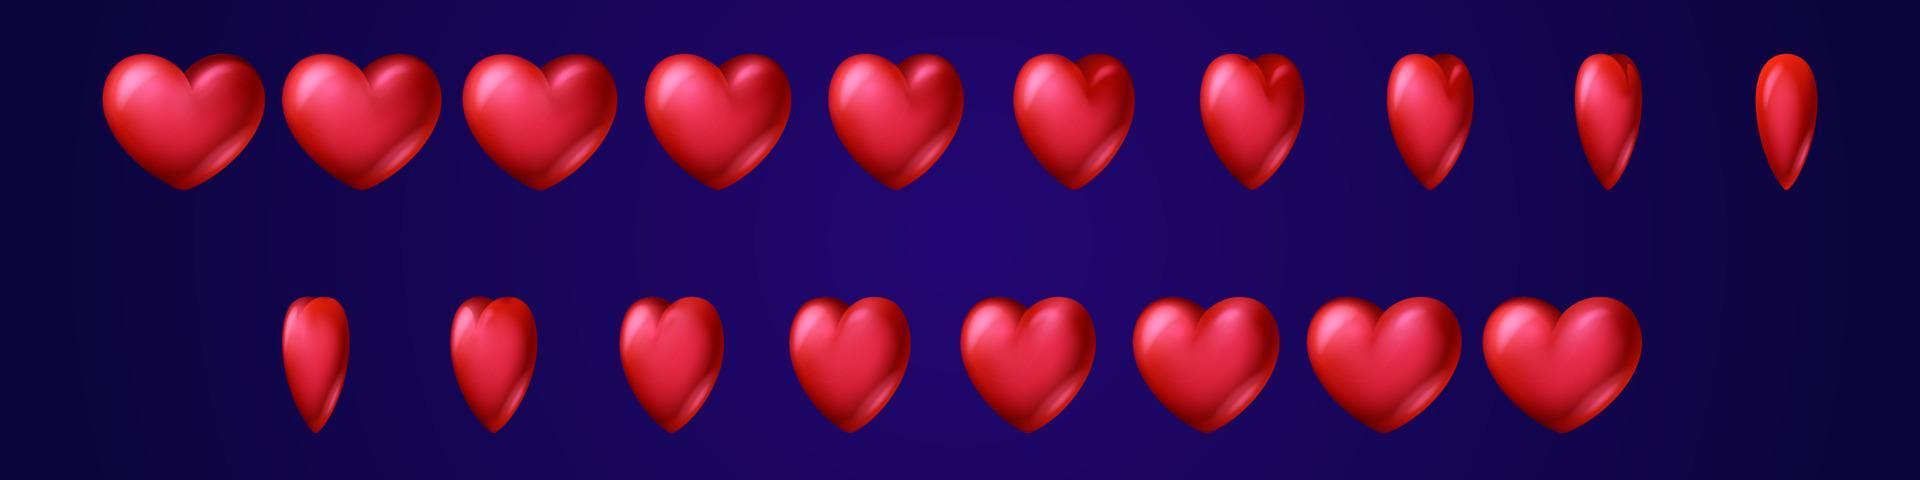 Red heart turn around game animation sprite sheet vector